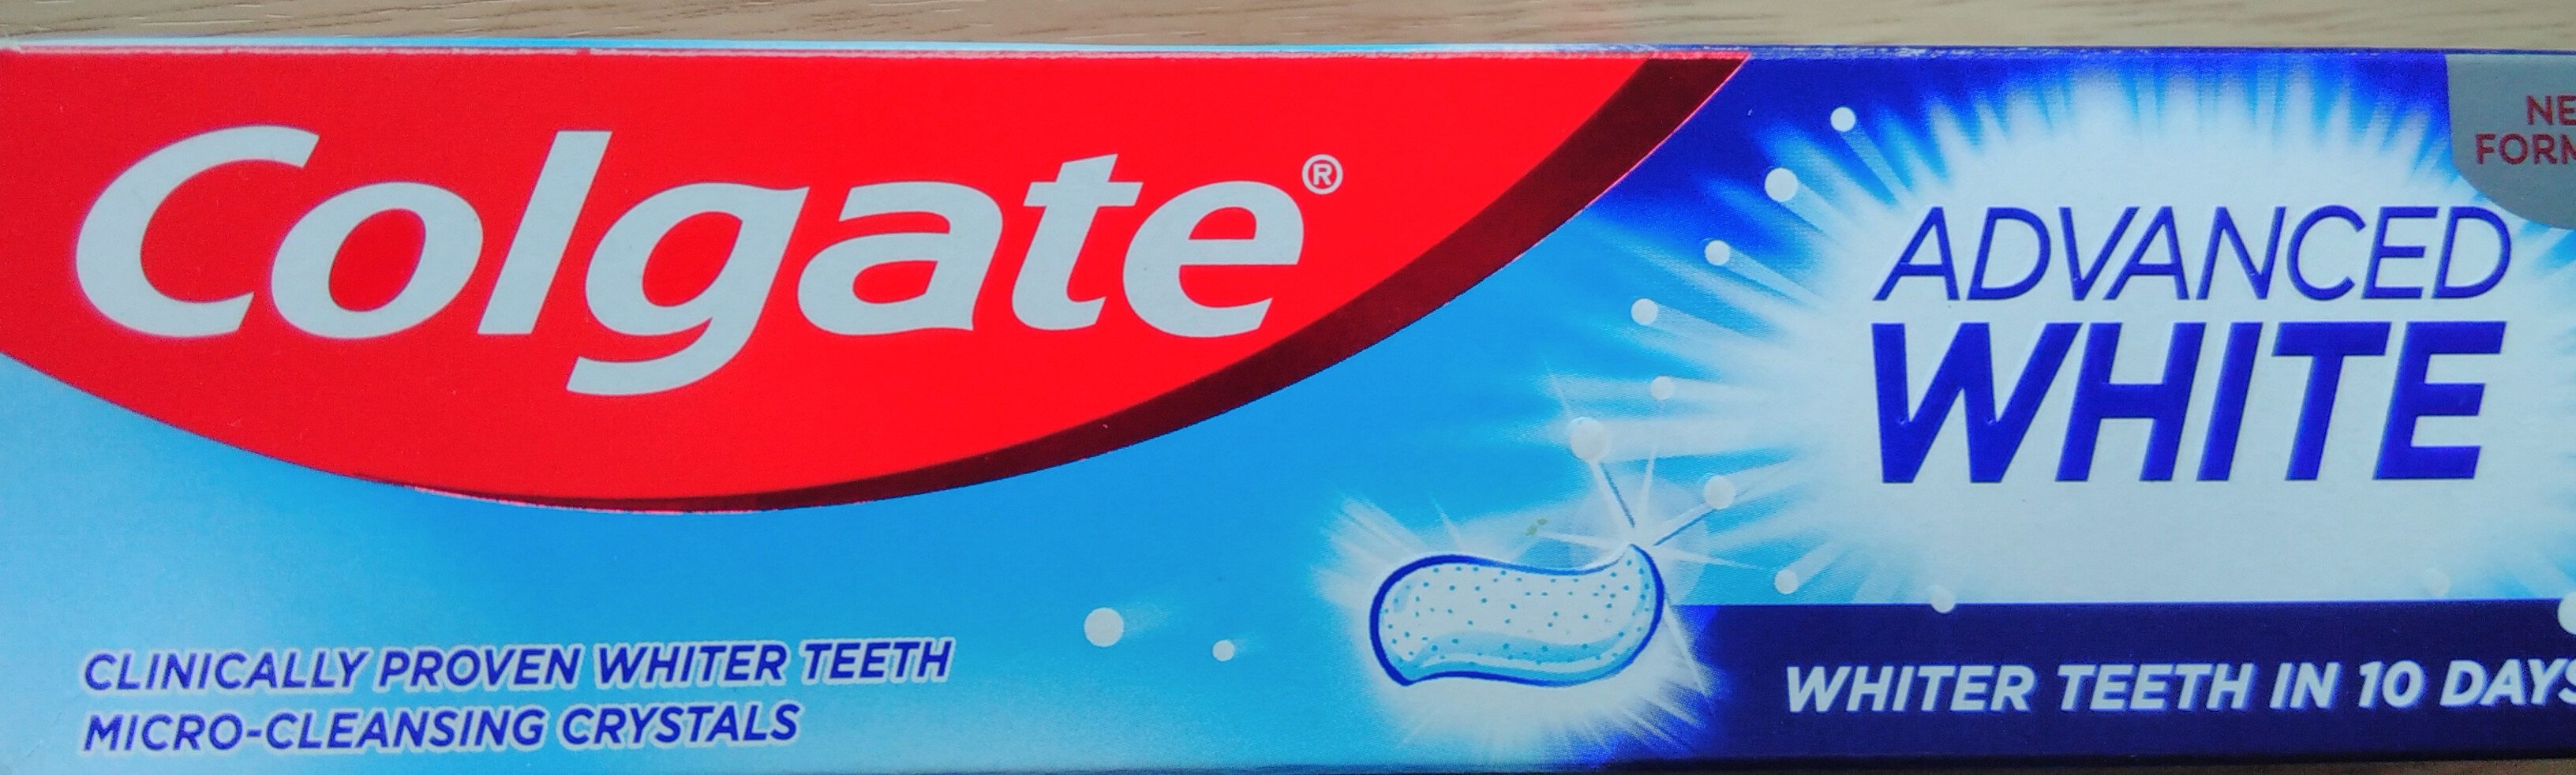 Colgate Advanced White Toothpaste - Product - en